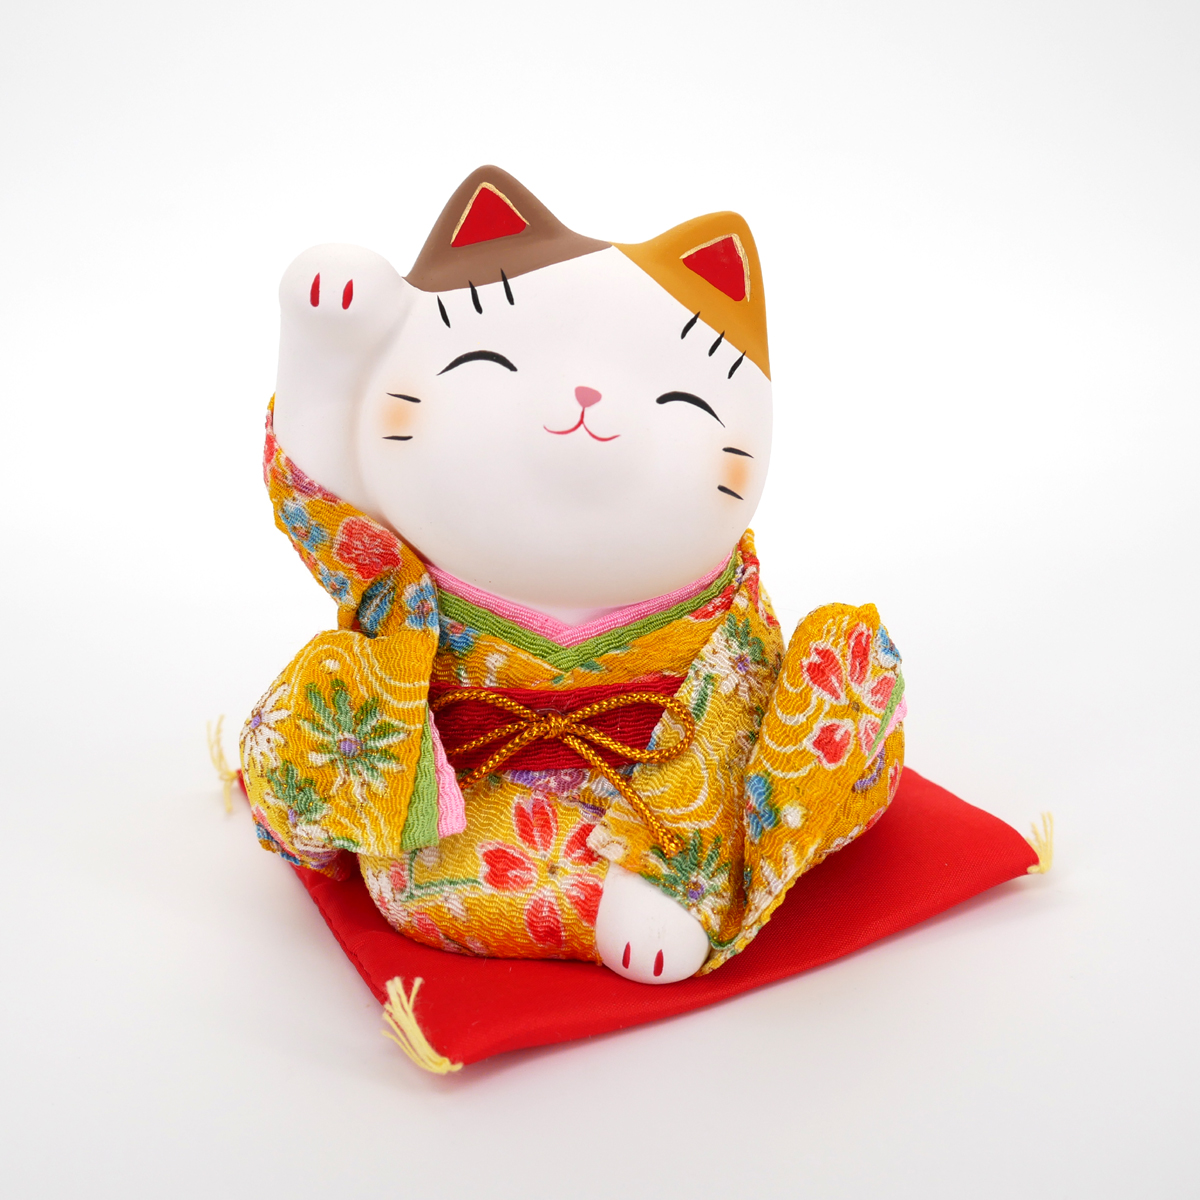 chat porte-bonheur manekineko japonais en céramique, KIMONO, jaune